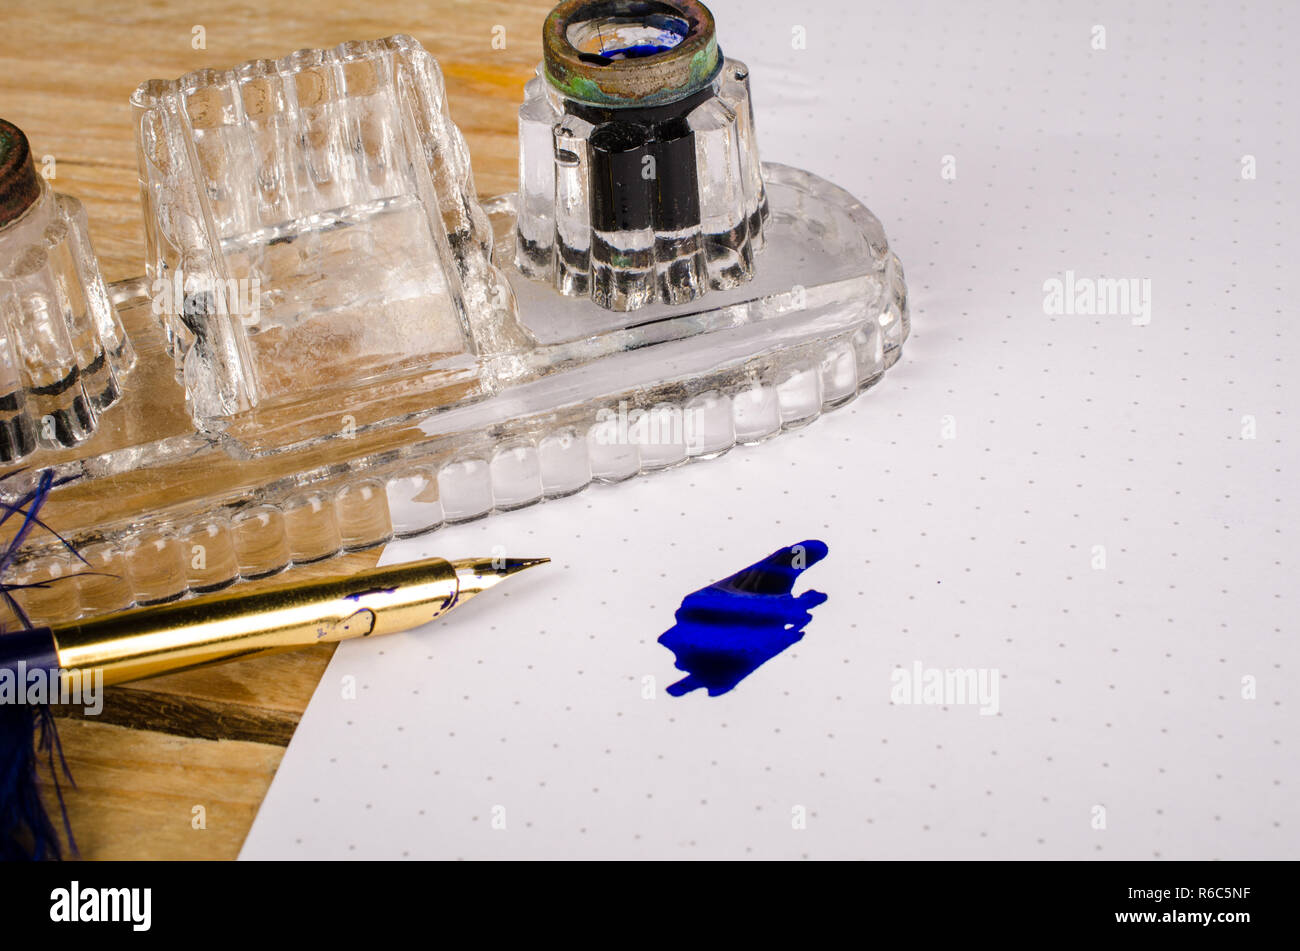 Dip Pen Shape Quill Document Next Ink Well Stock Photo by ©OlafSpeier  224186436